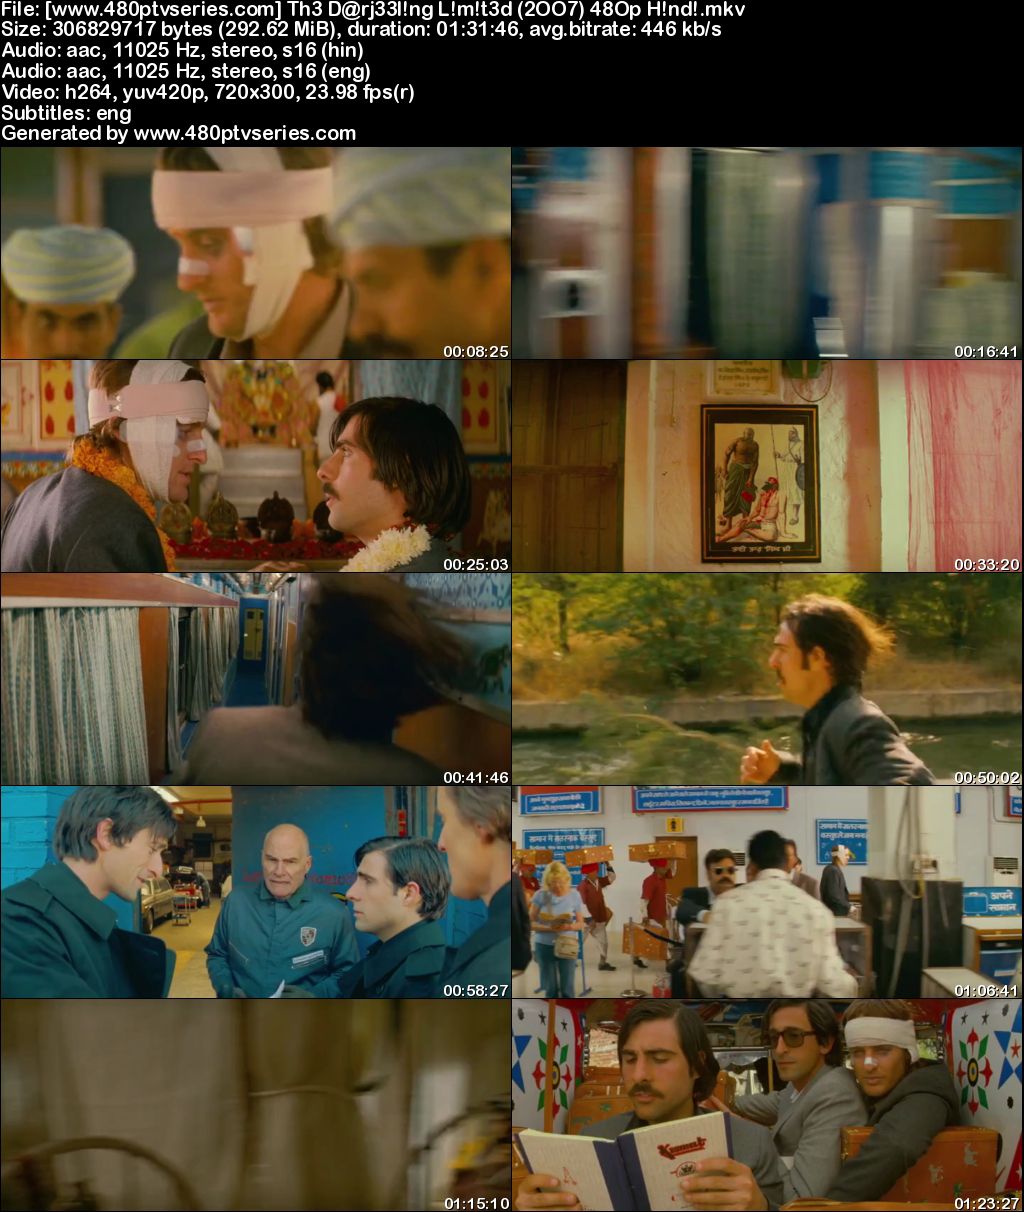 The Darjeeling Limited (2007) 300MB Full Hindi Dual Audio Movie Download 480p Bluray Free Watch Online Full Movie Download Worldfree4u 9xmovies